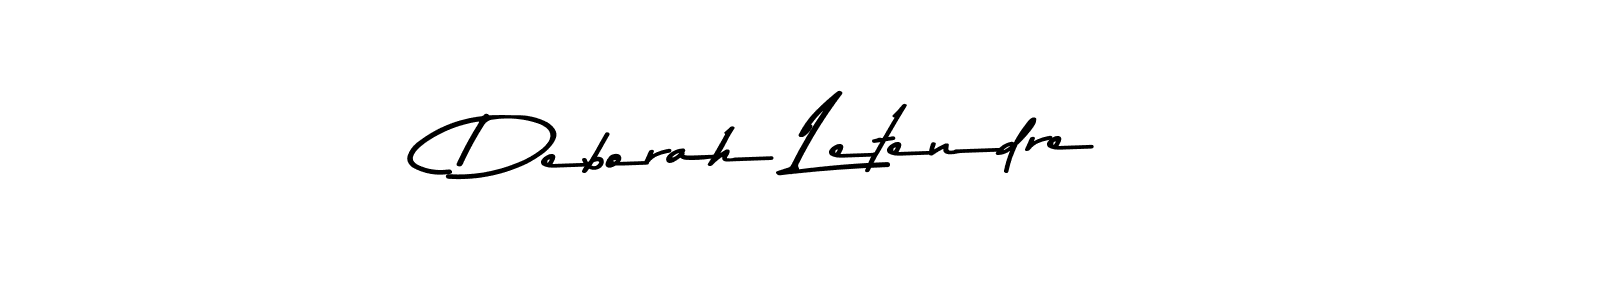 Make a beautiful signature design for name Deborah Letendre. Use this online signature maker to create a handwritten signature for free. Deborah Letendre signature style 9 images and pictures png